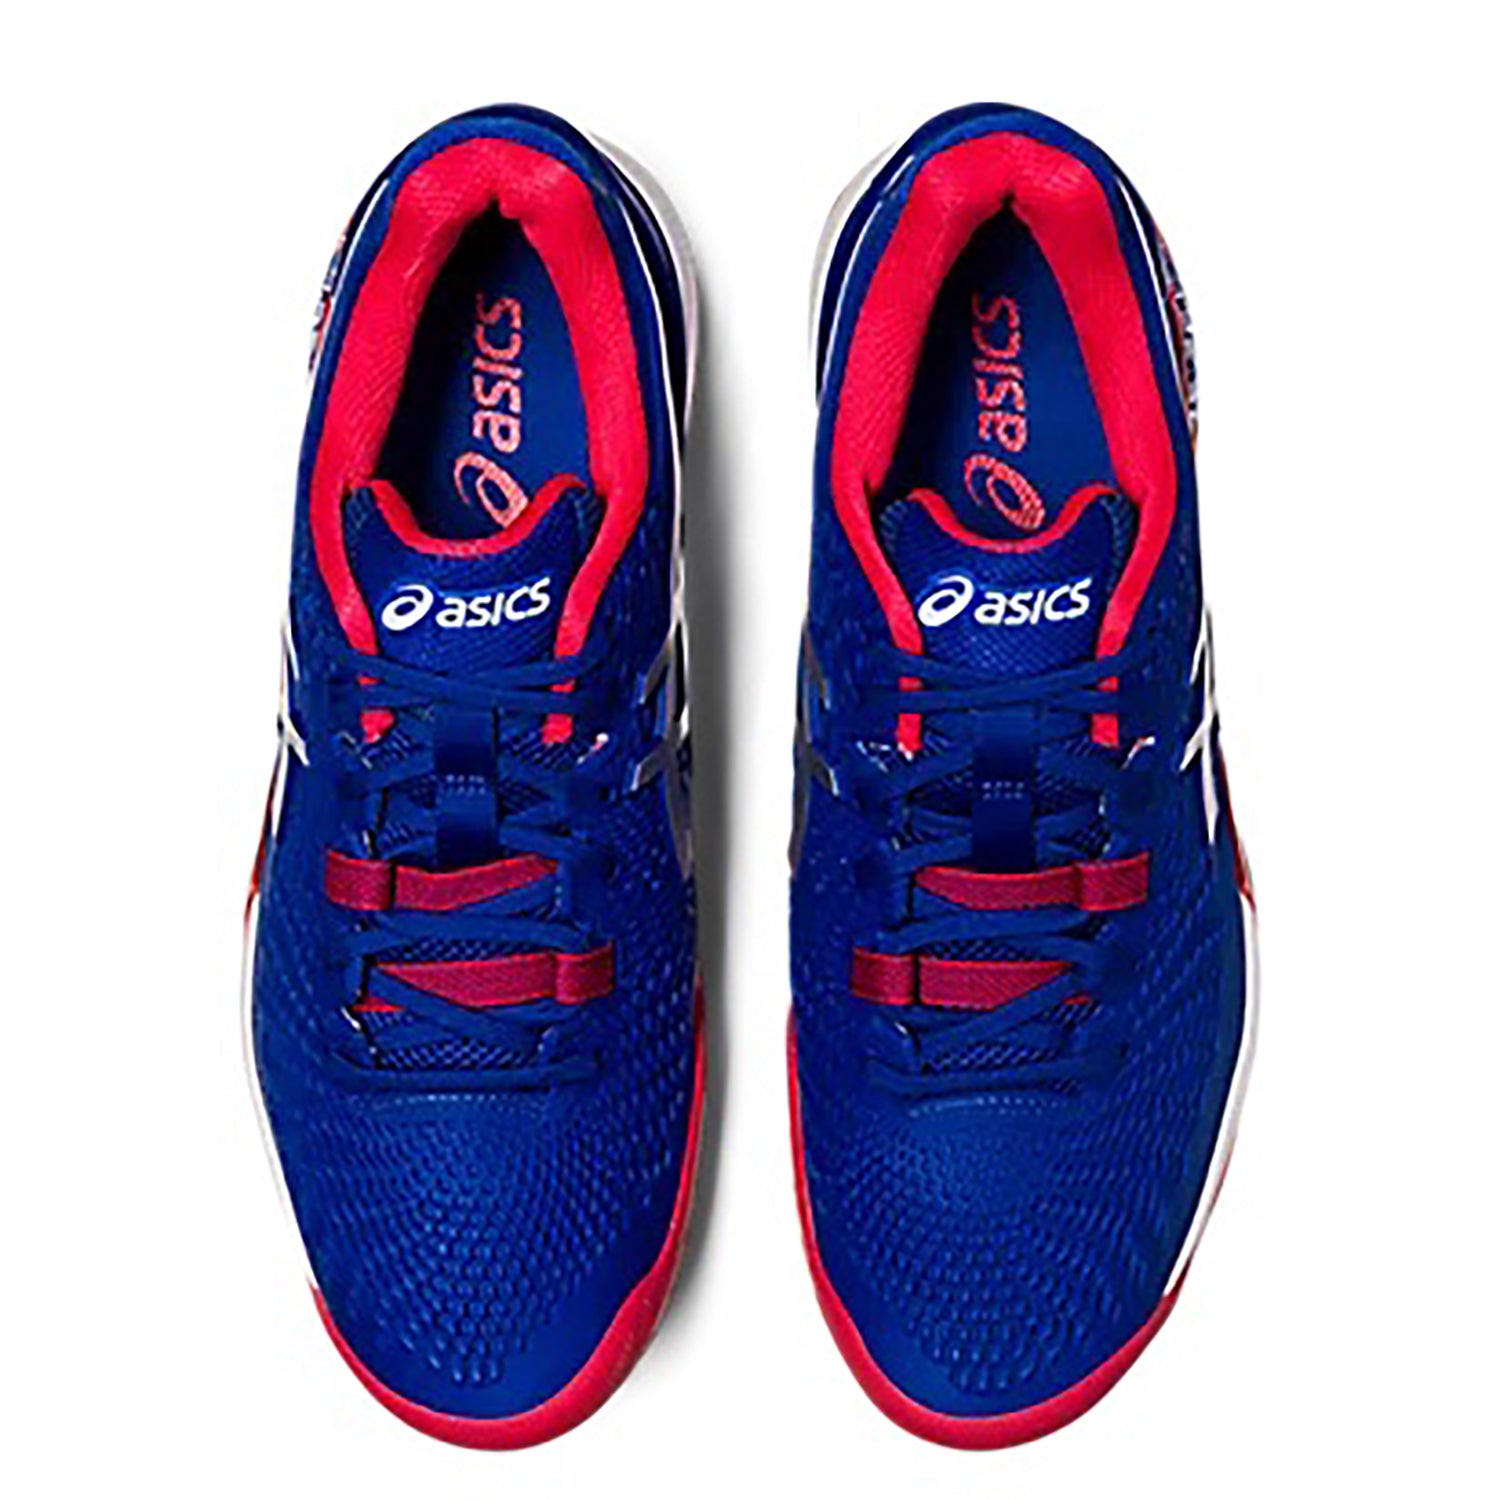 Asics Gel-Resolution 9 Limited Edition Men's Tennis Shoes, Asics Blue/Pure Silver - Best Price online Prokicksports.com